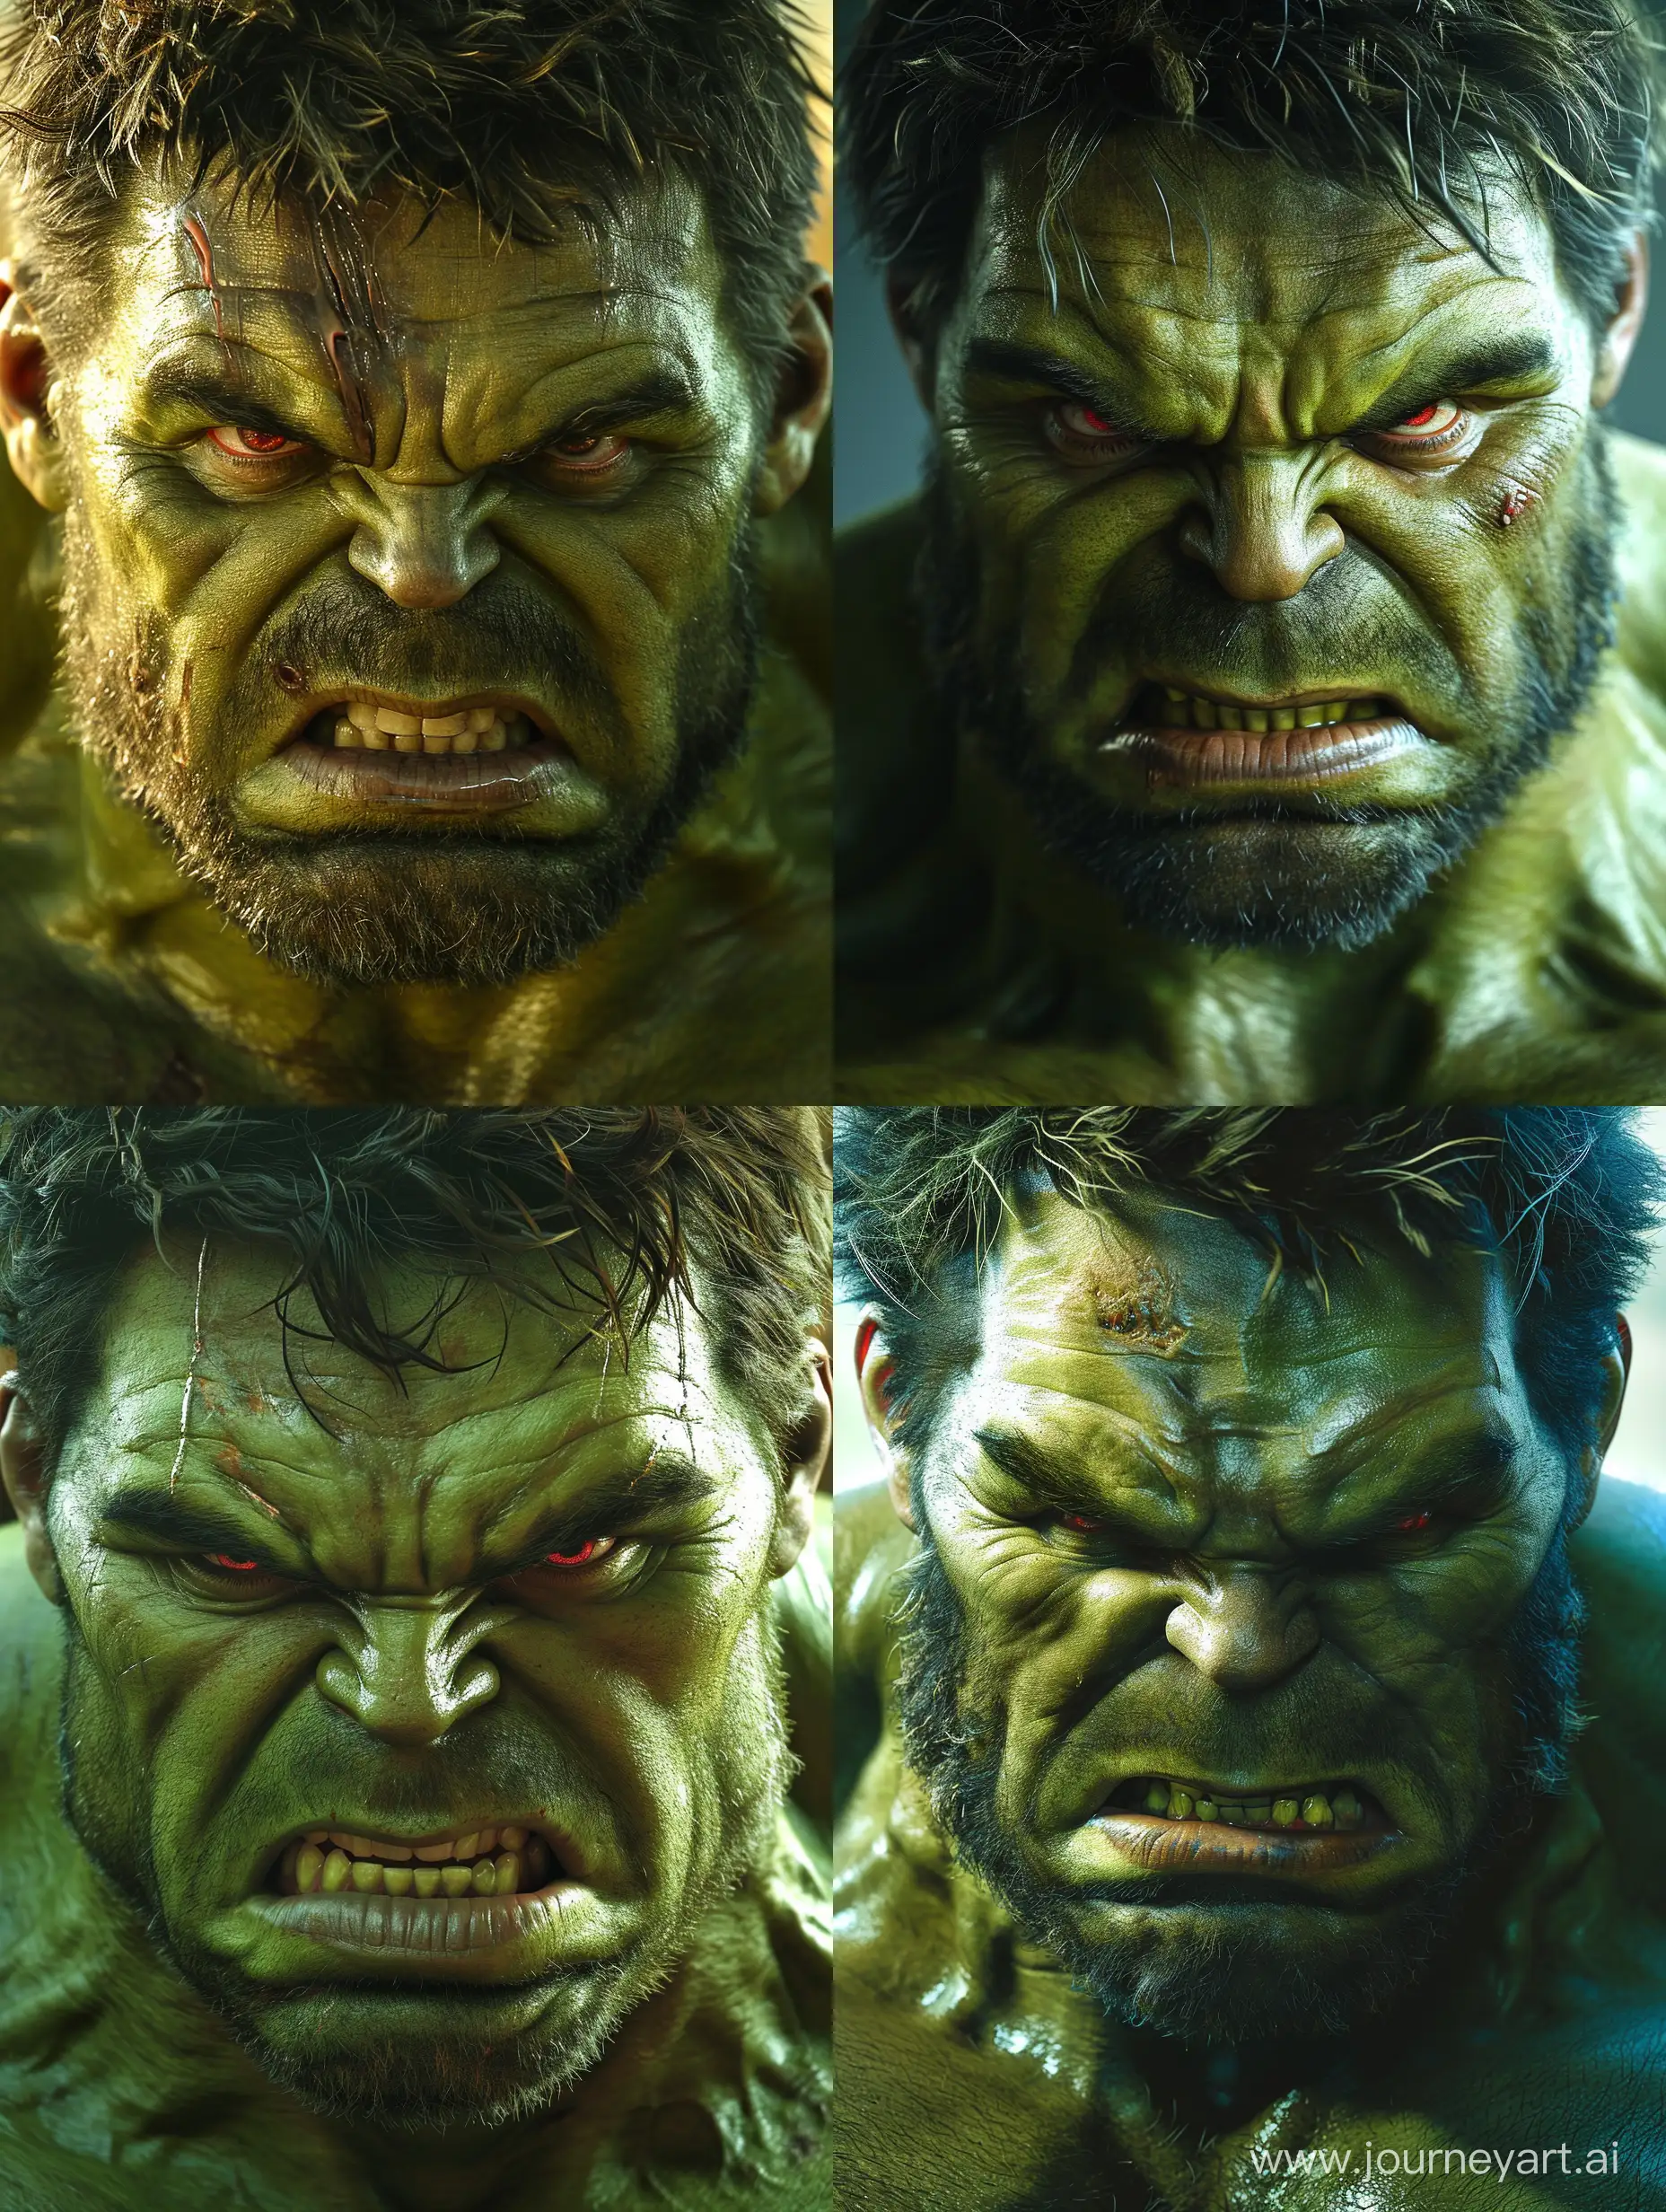 Mark-Ruffalo-as-The-Intense-and-Angry-Hulk-with-Green-Skin-and-Bushy-Eyebrows